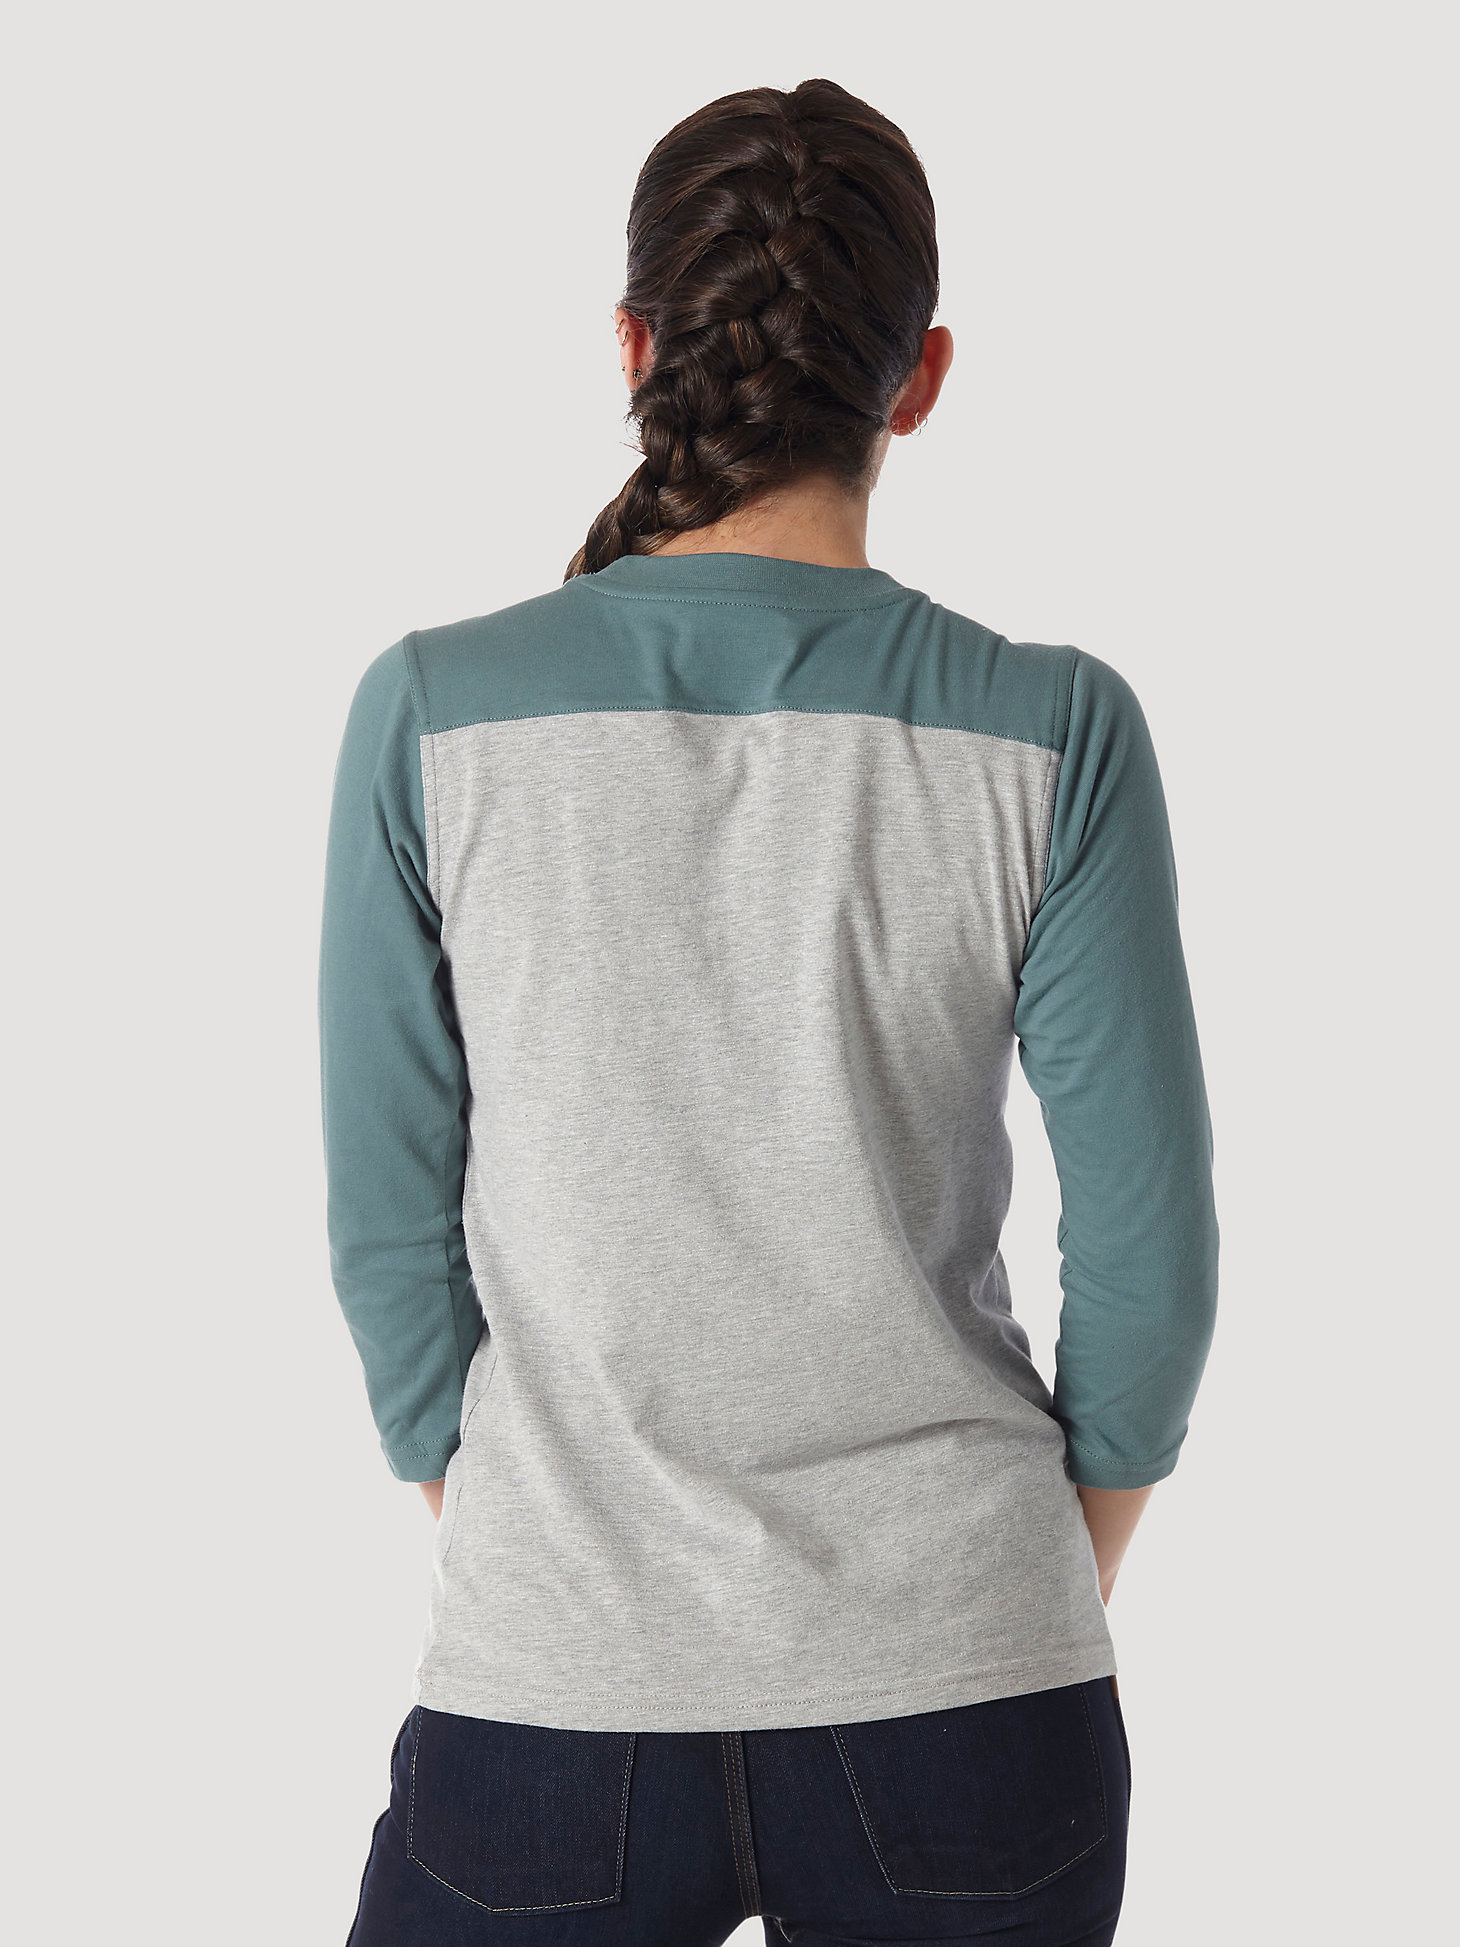 Women's Wrangler® RIGGS Workwear® Three-Quarter Sleeve Colorblocked Performance T-Shirt in Sea Green/Grey alternative view 1